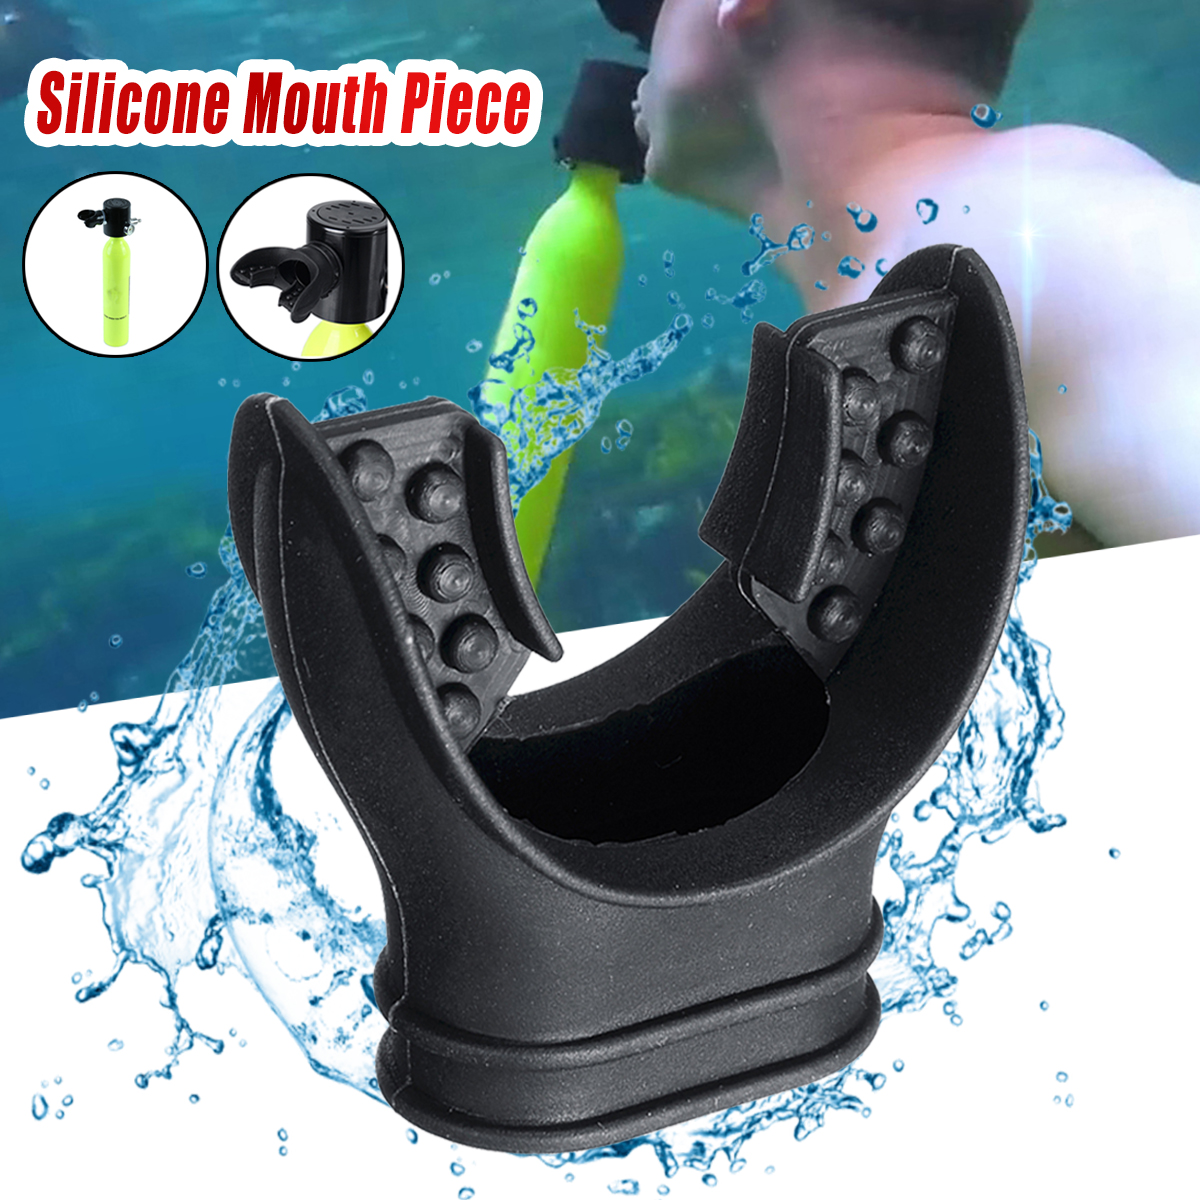 Silicone-Mouth-Piece-for-Scuba-Diving-Regulators-Snorkels-Replacement-Wrap-Diving-Set-1632631